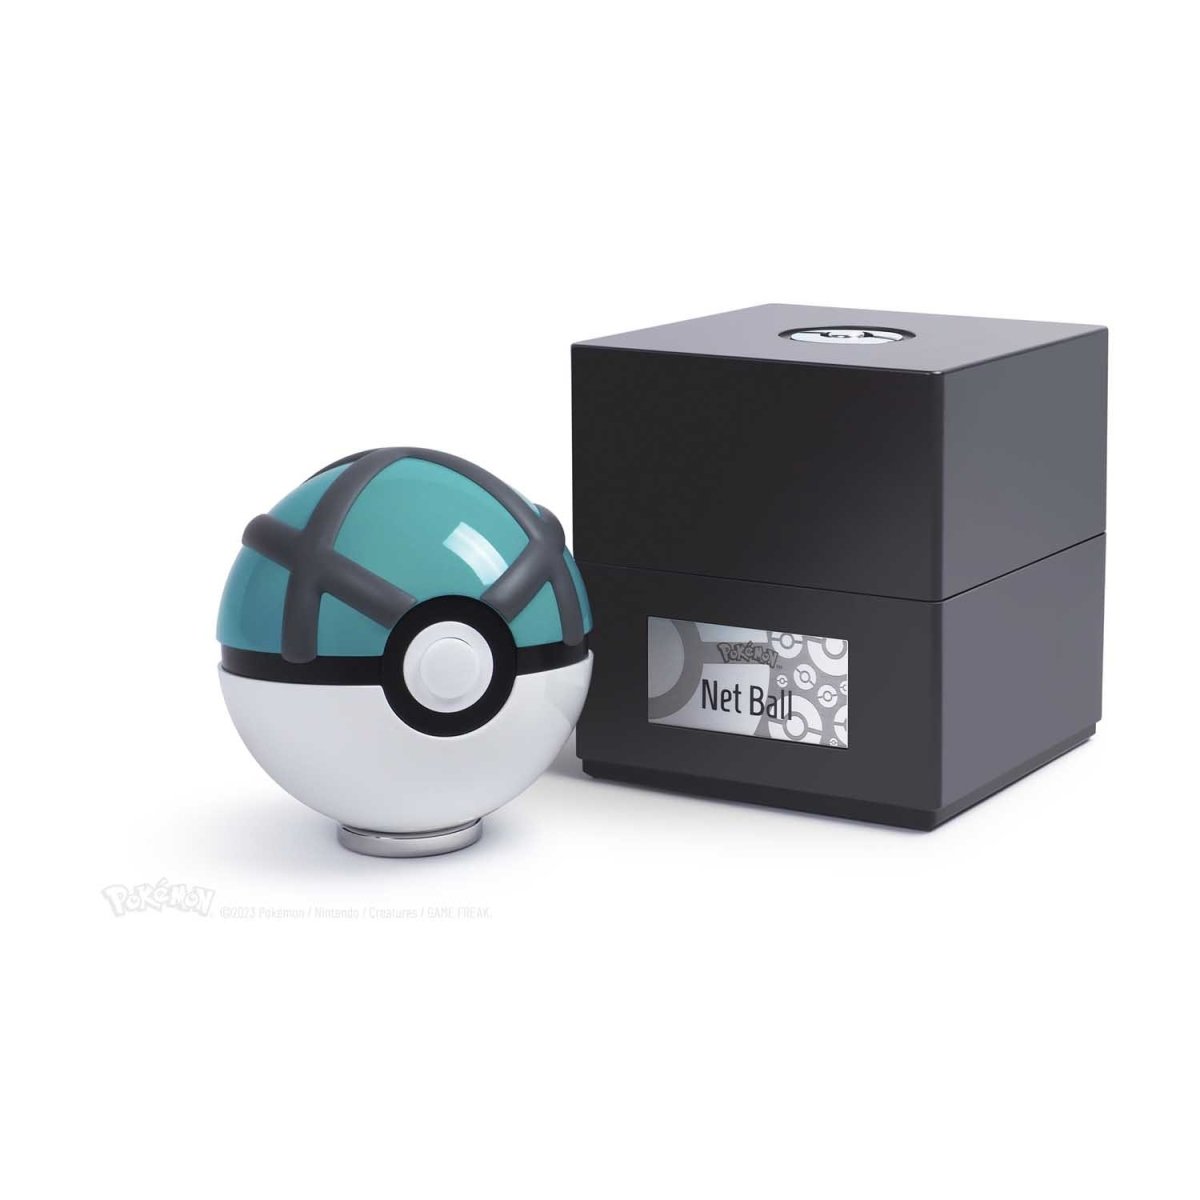 Pokémon: The Wand Company presenta la Net Ball ¡Conoce los detalles! 1